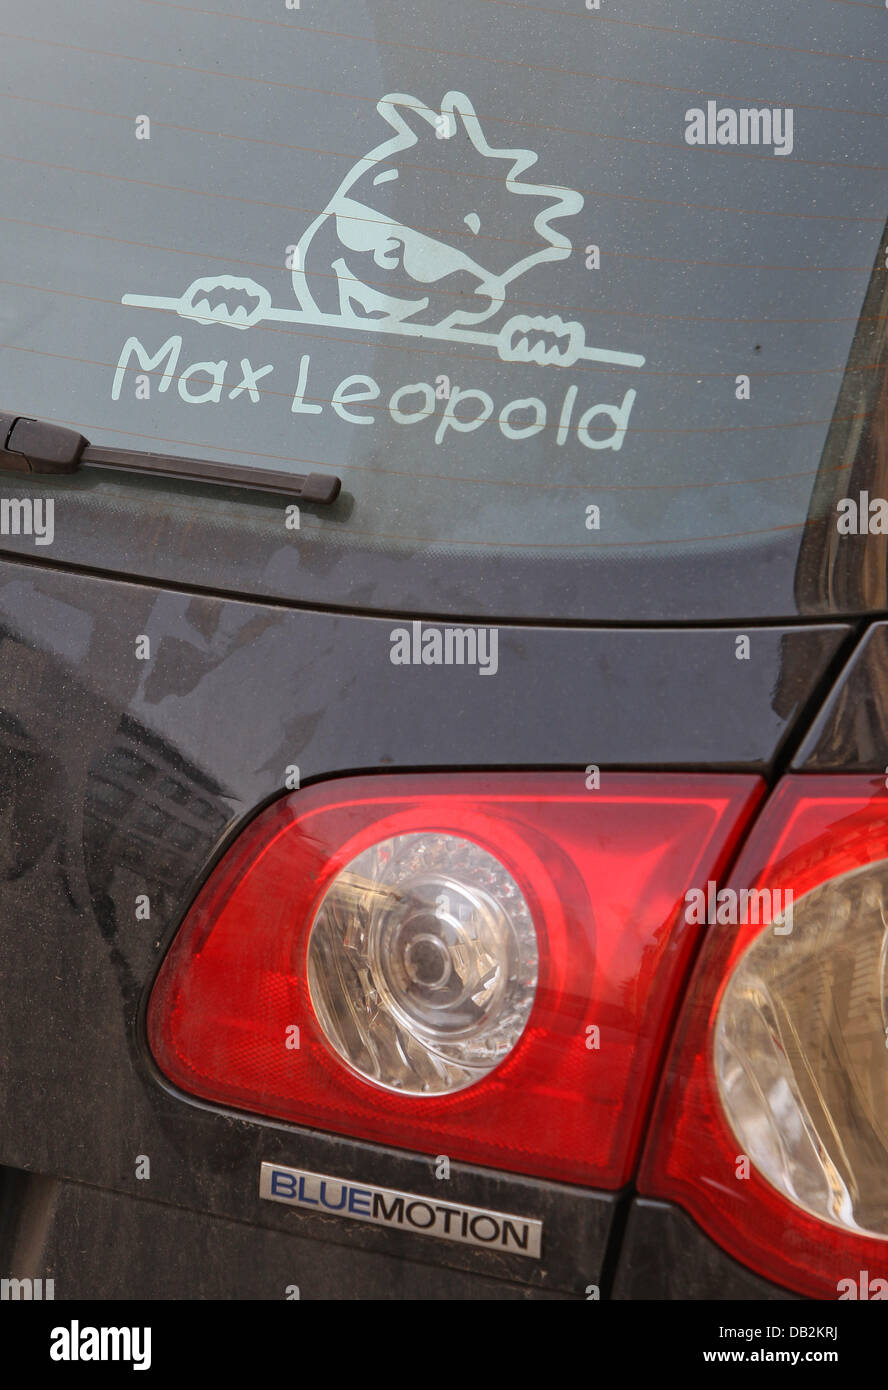 Auto Abzeichen, für MG Autoaufkleber Sticker Emblem, Auto Emblem